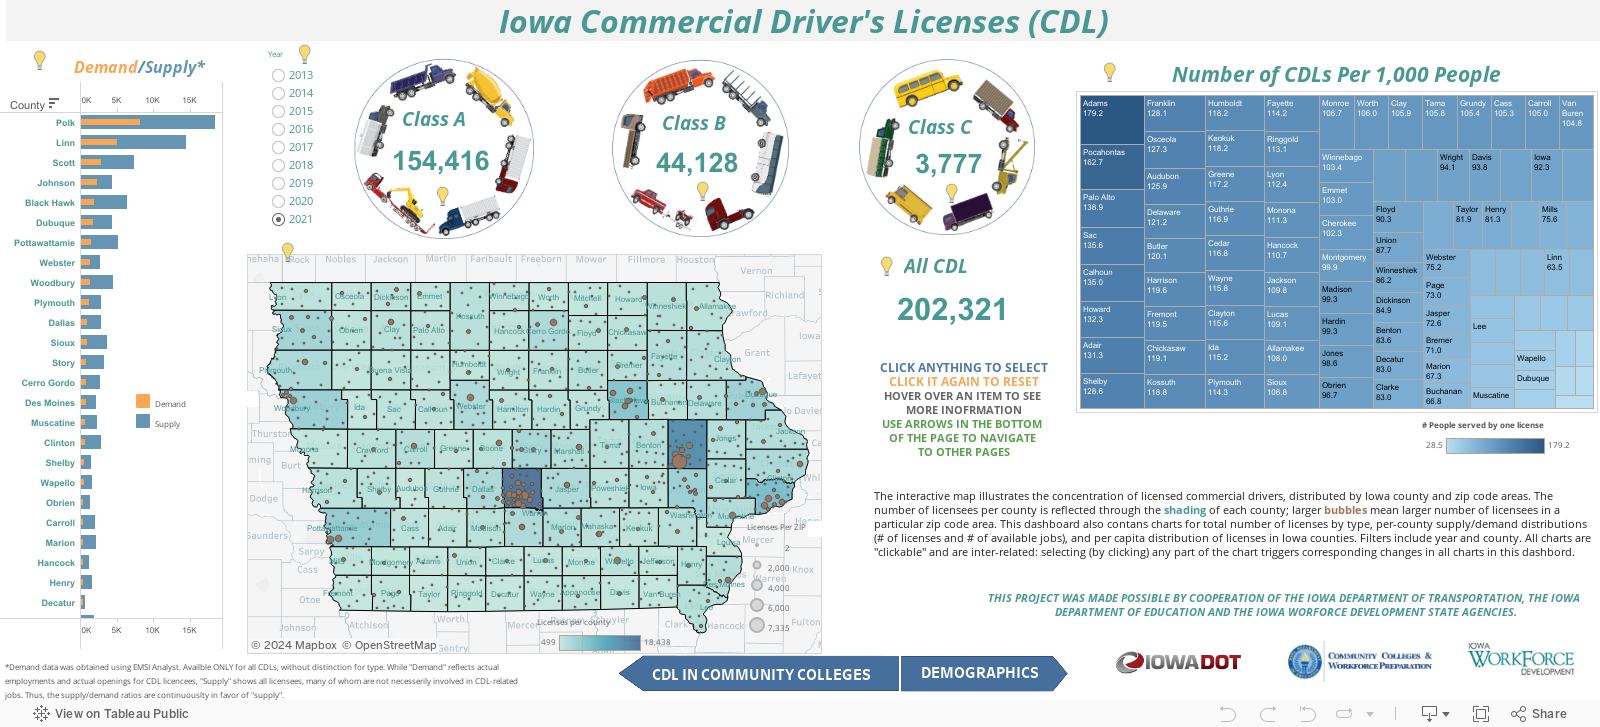           Iowa Registered Apprenticeship Sponsors and Employment Demand 